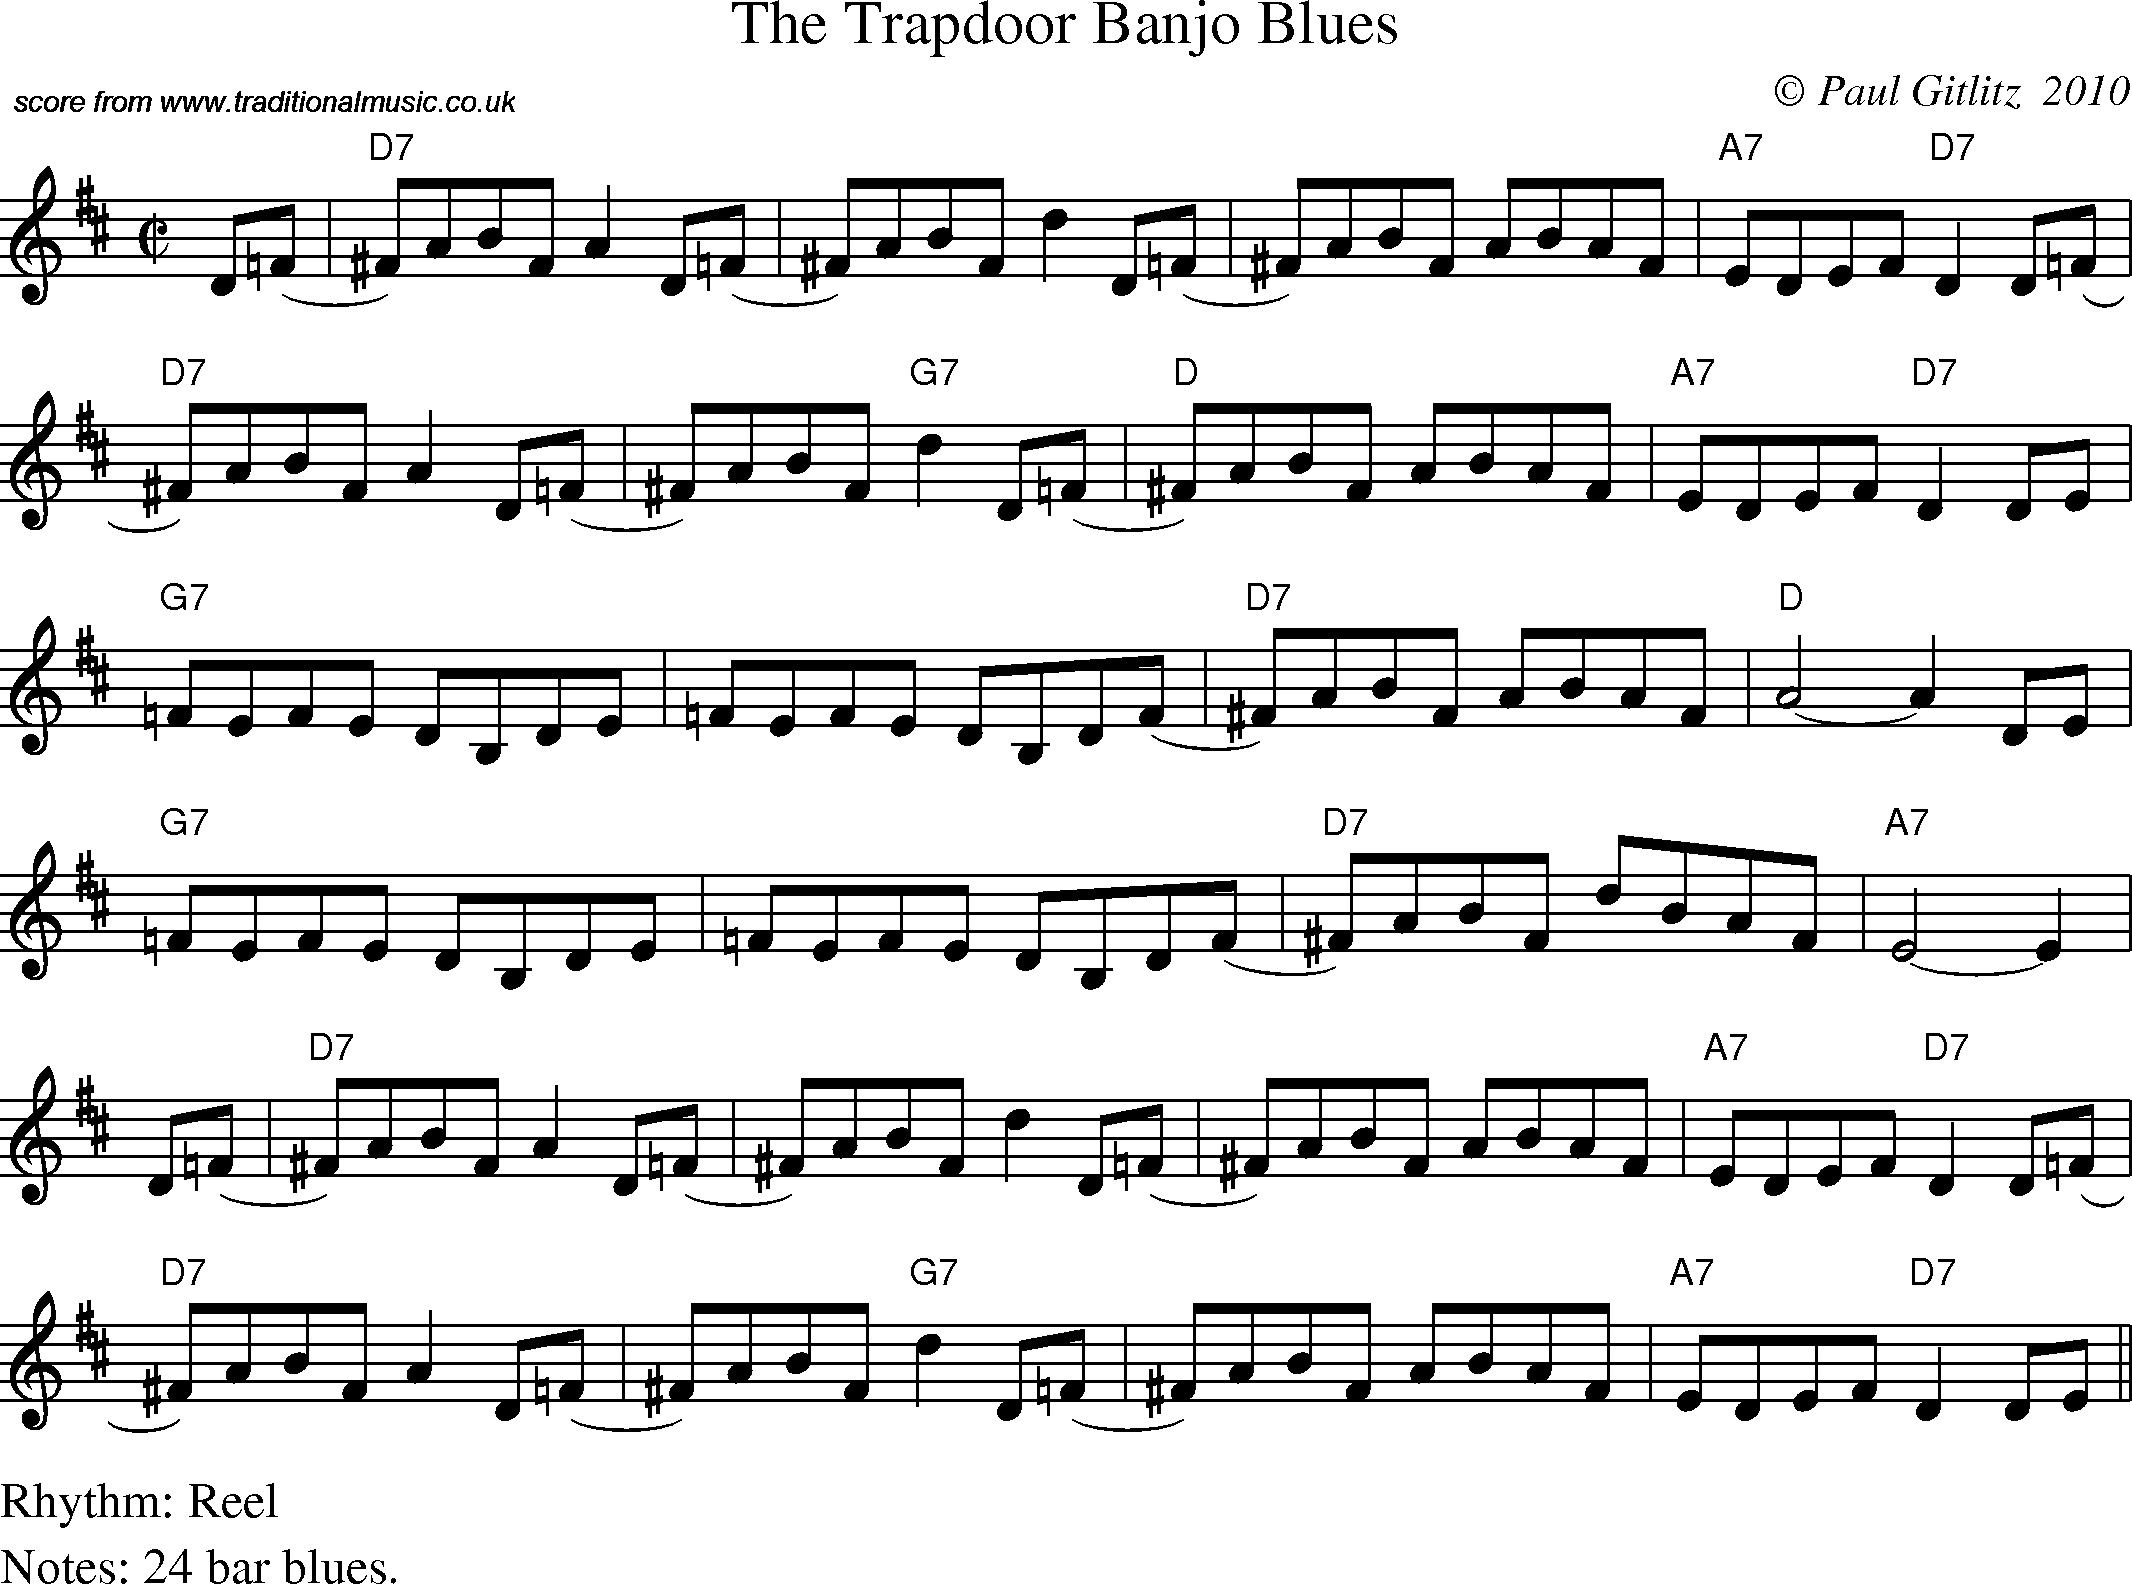 Sheet Music Score for Reel - Trapdoor Banjo Blues, The